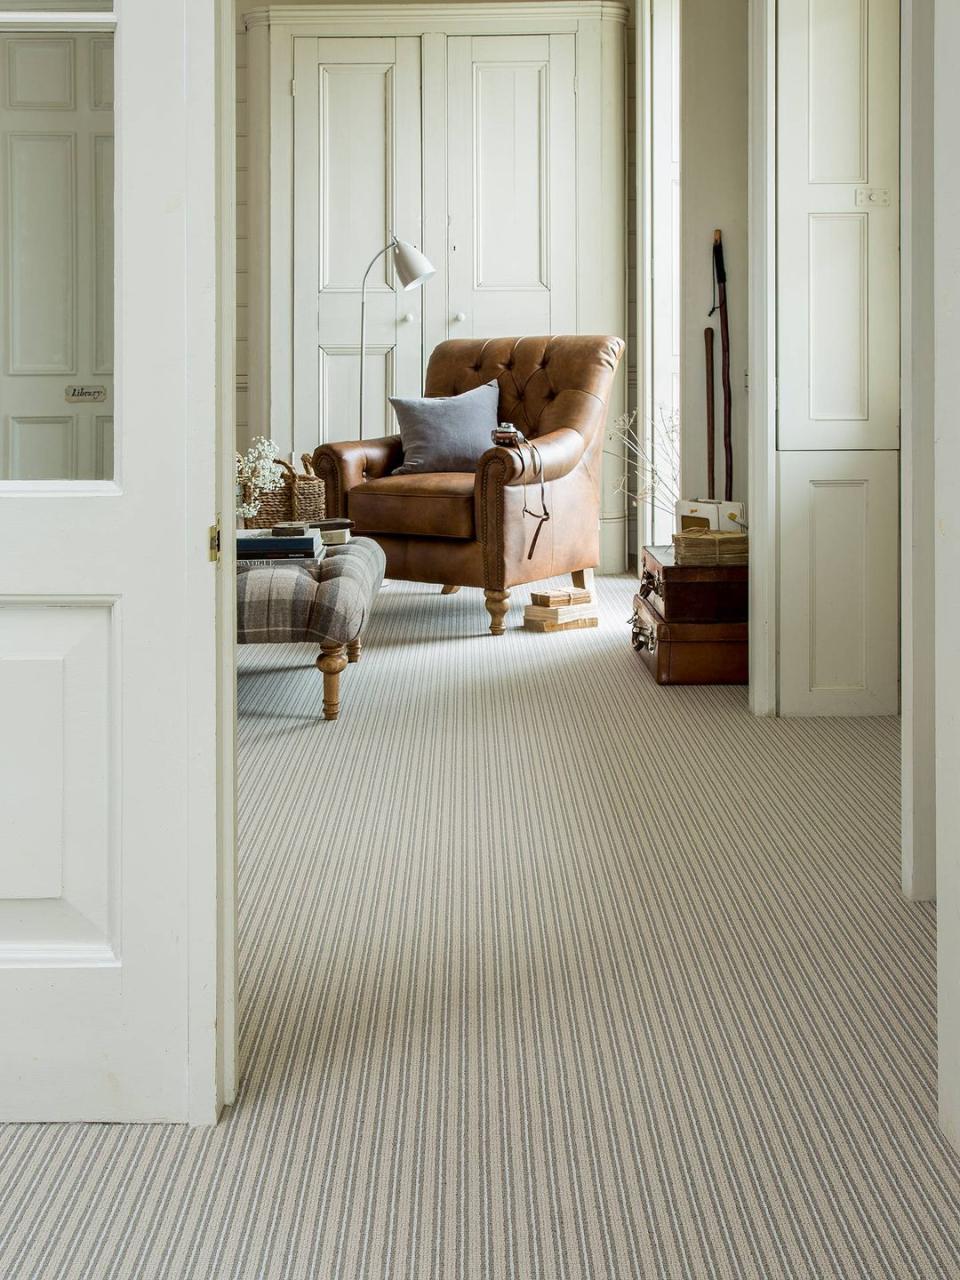 7) Best striped carpet ideas: Matching neutrals